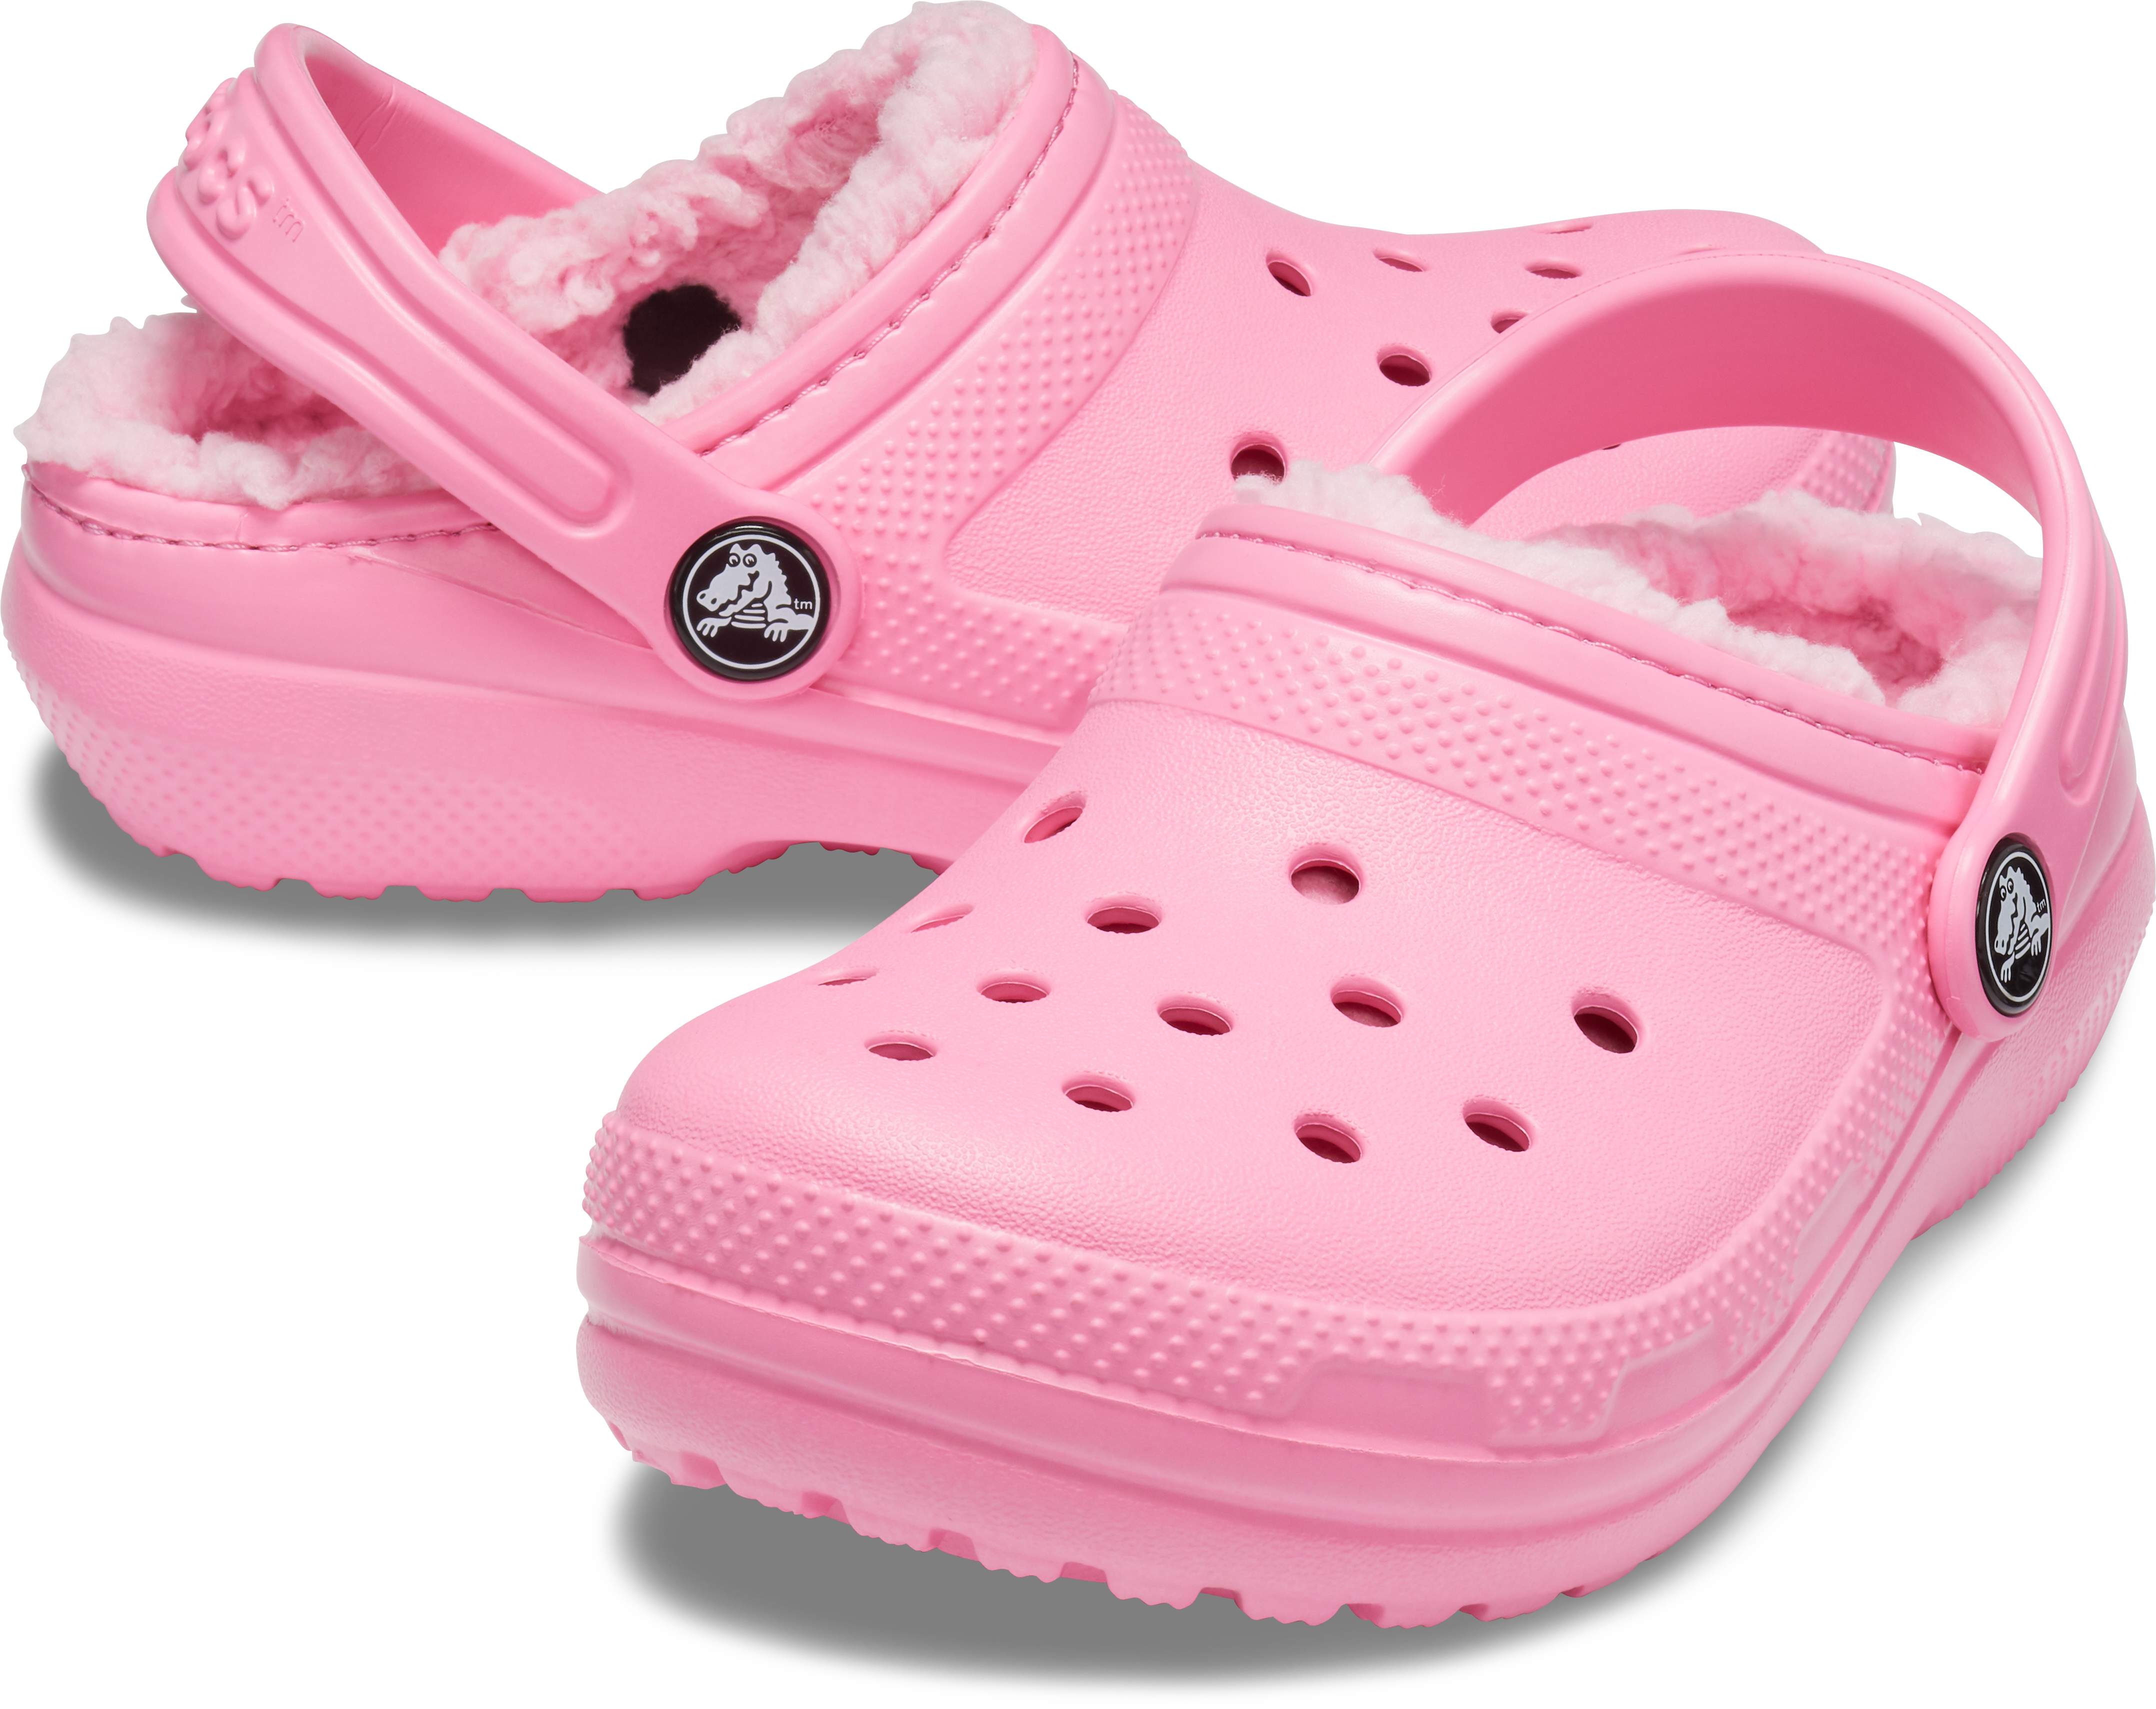 pink crocs with fur inside